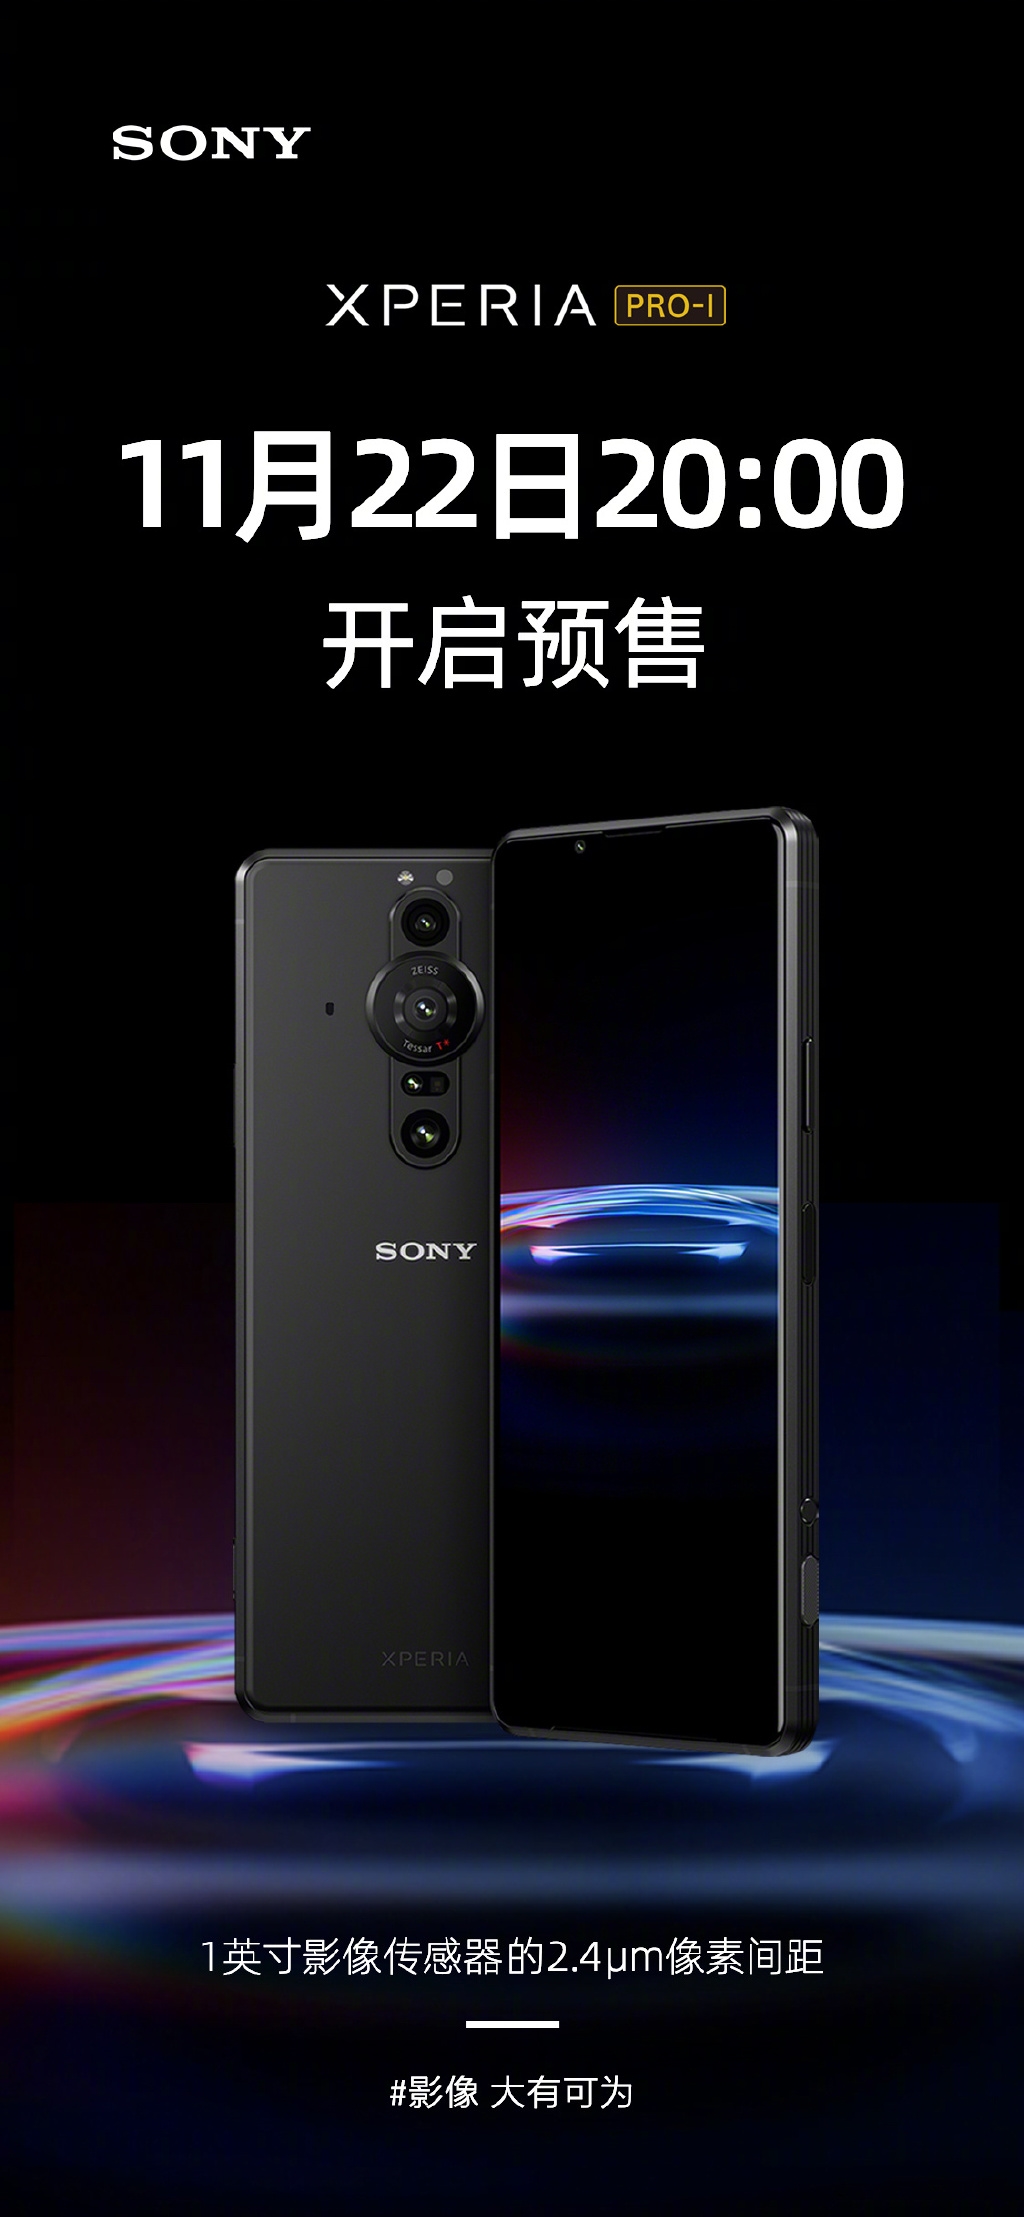 Sony Xperia PRO-I Pre-order in China